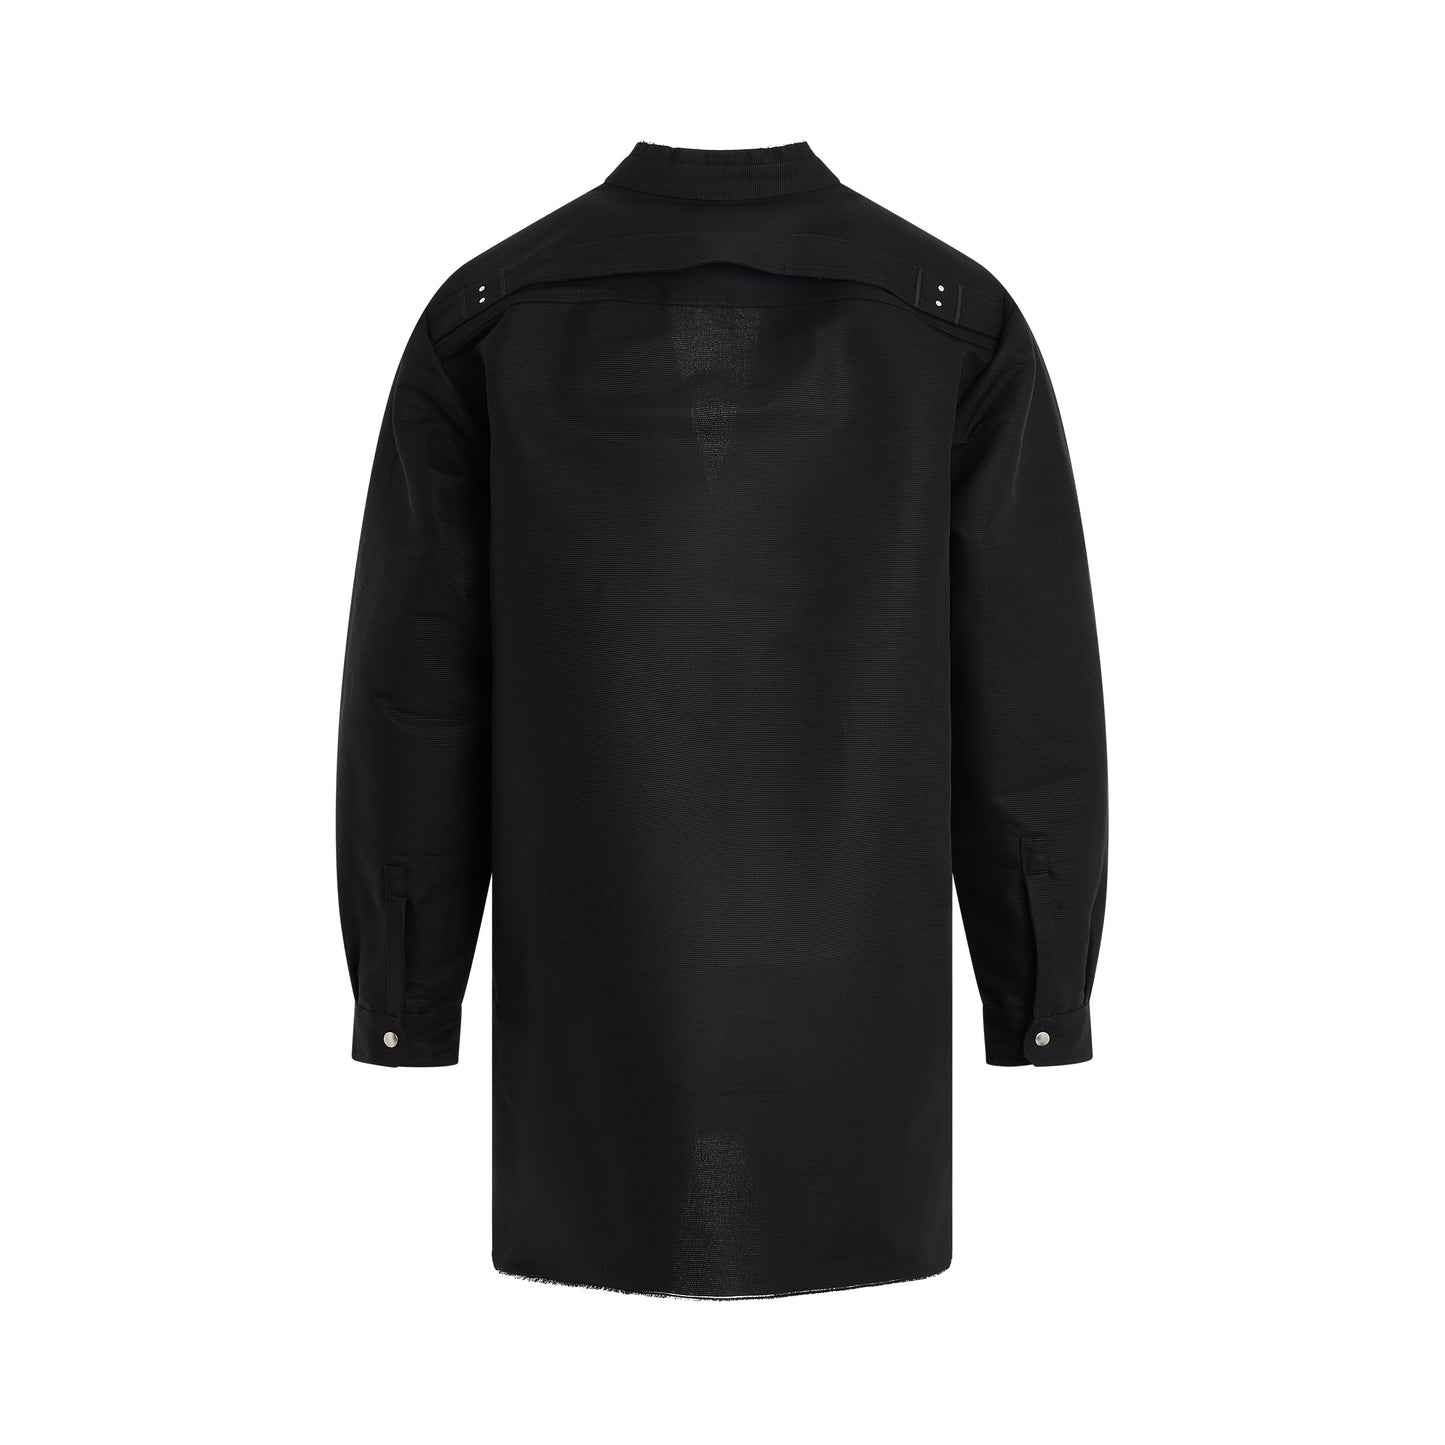 Strobe Jumbo Outershirt in Black